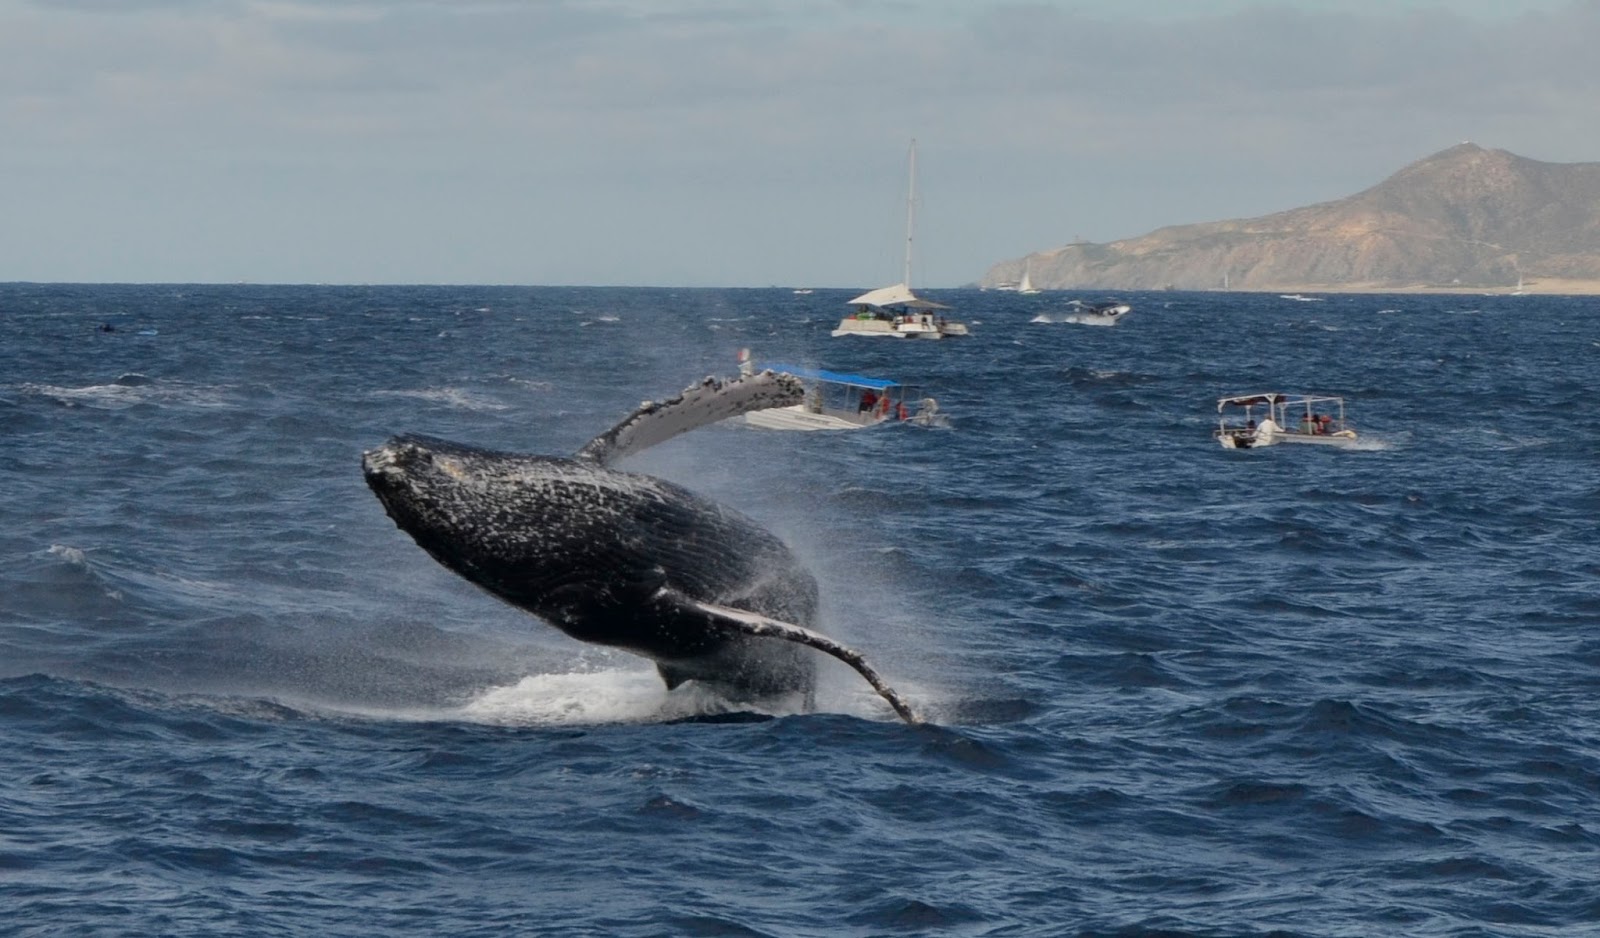 Following Mama Sun: Love Those Whales